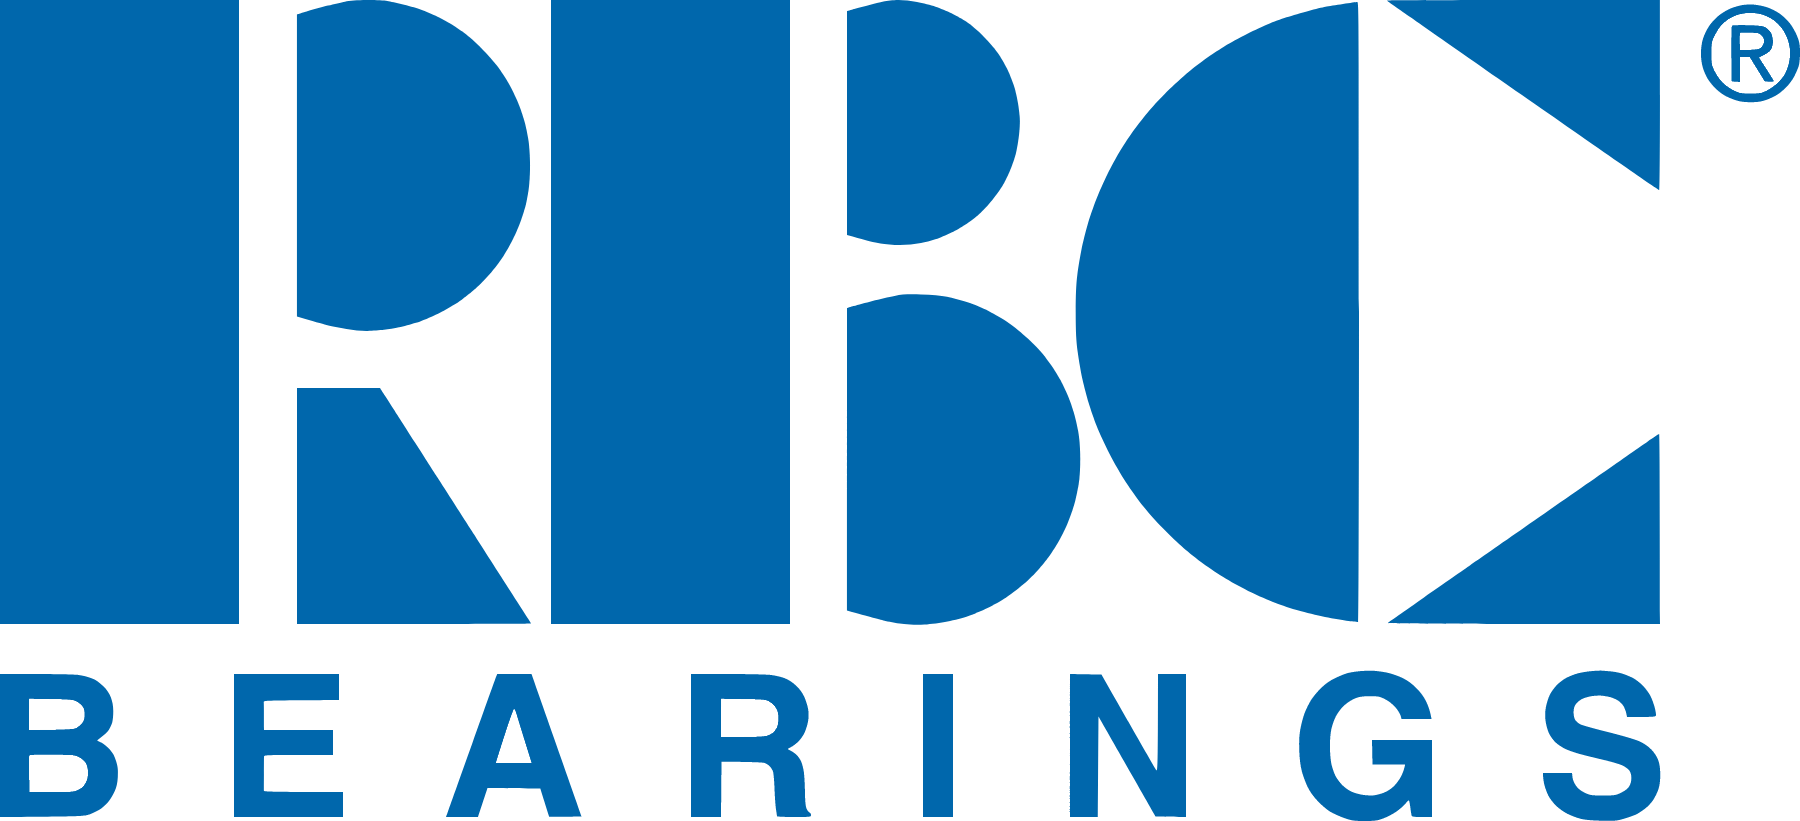 RBC Bearings logo large (transparent PNG)